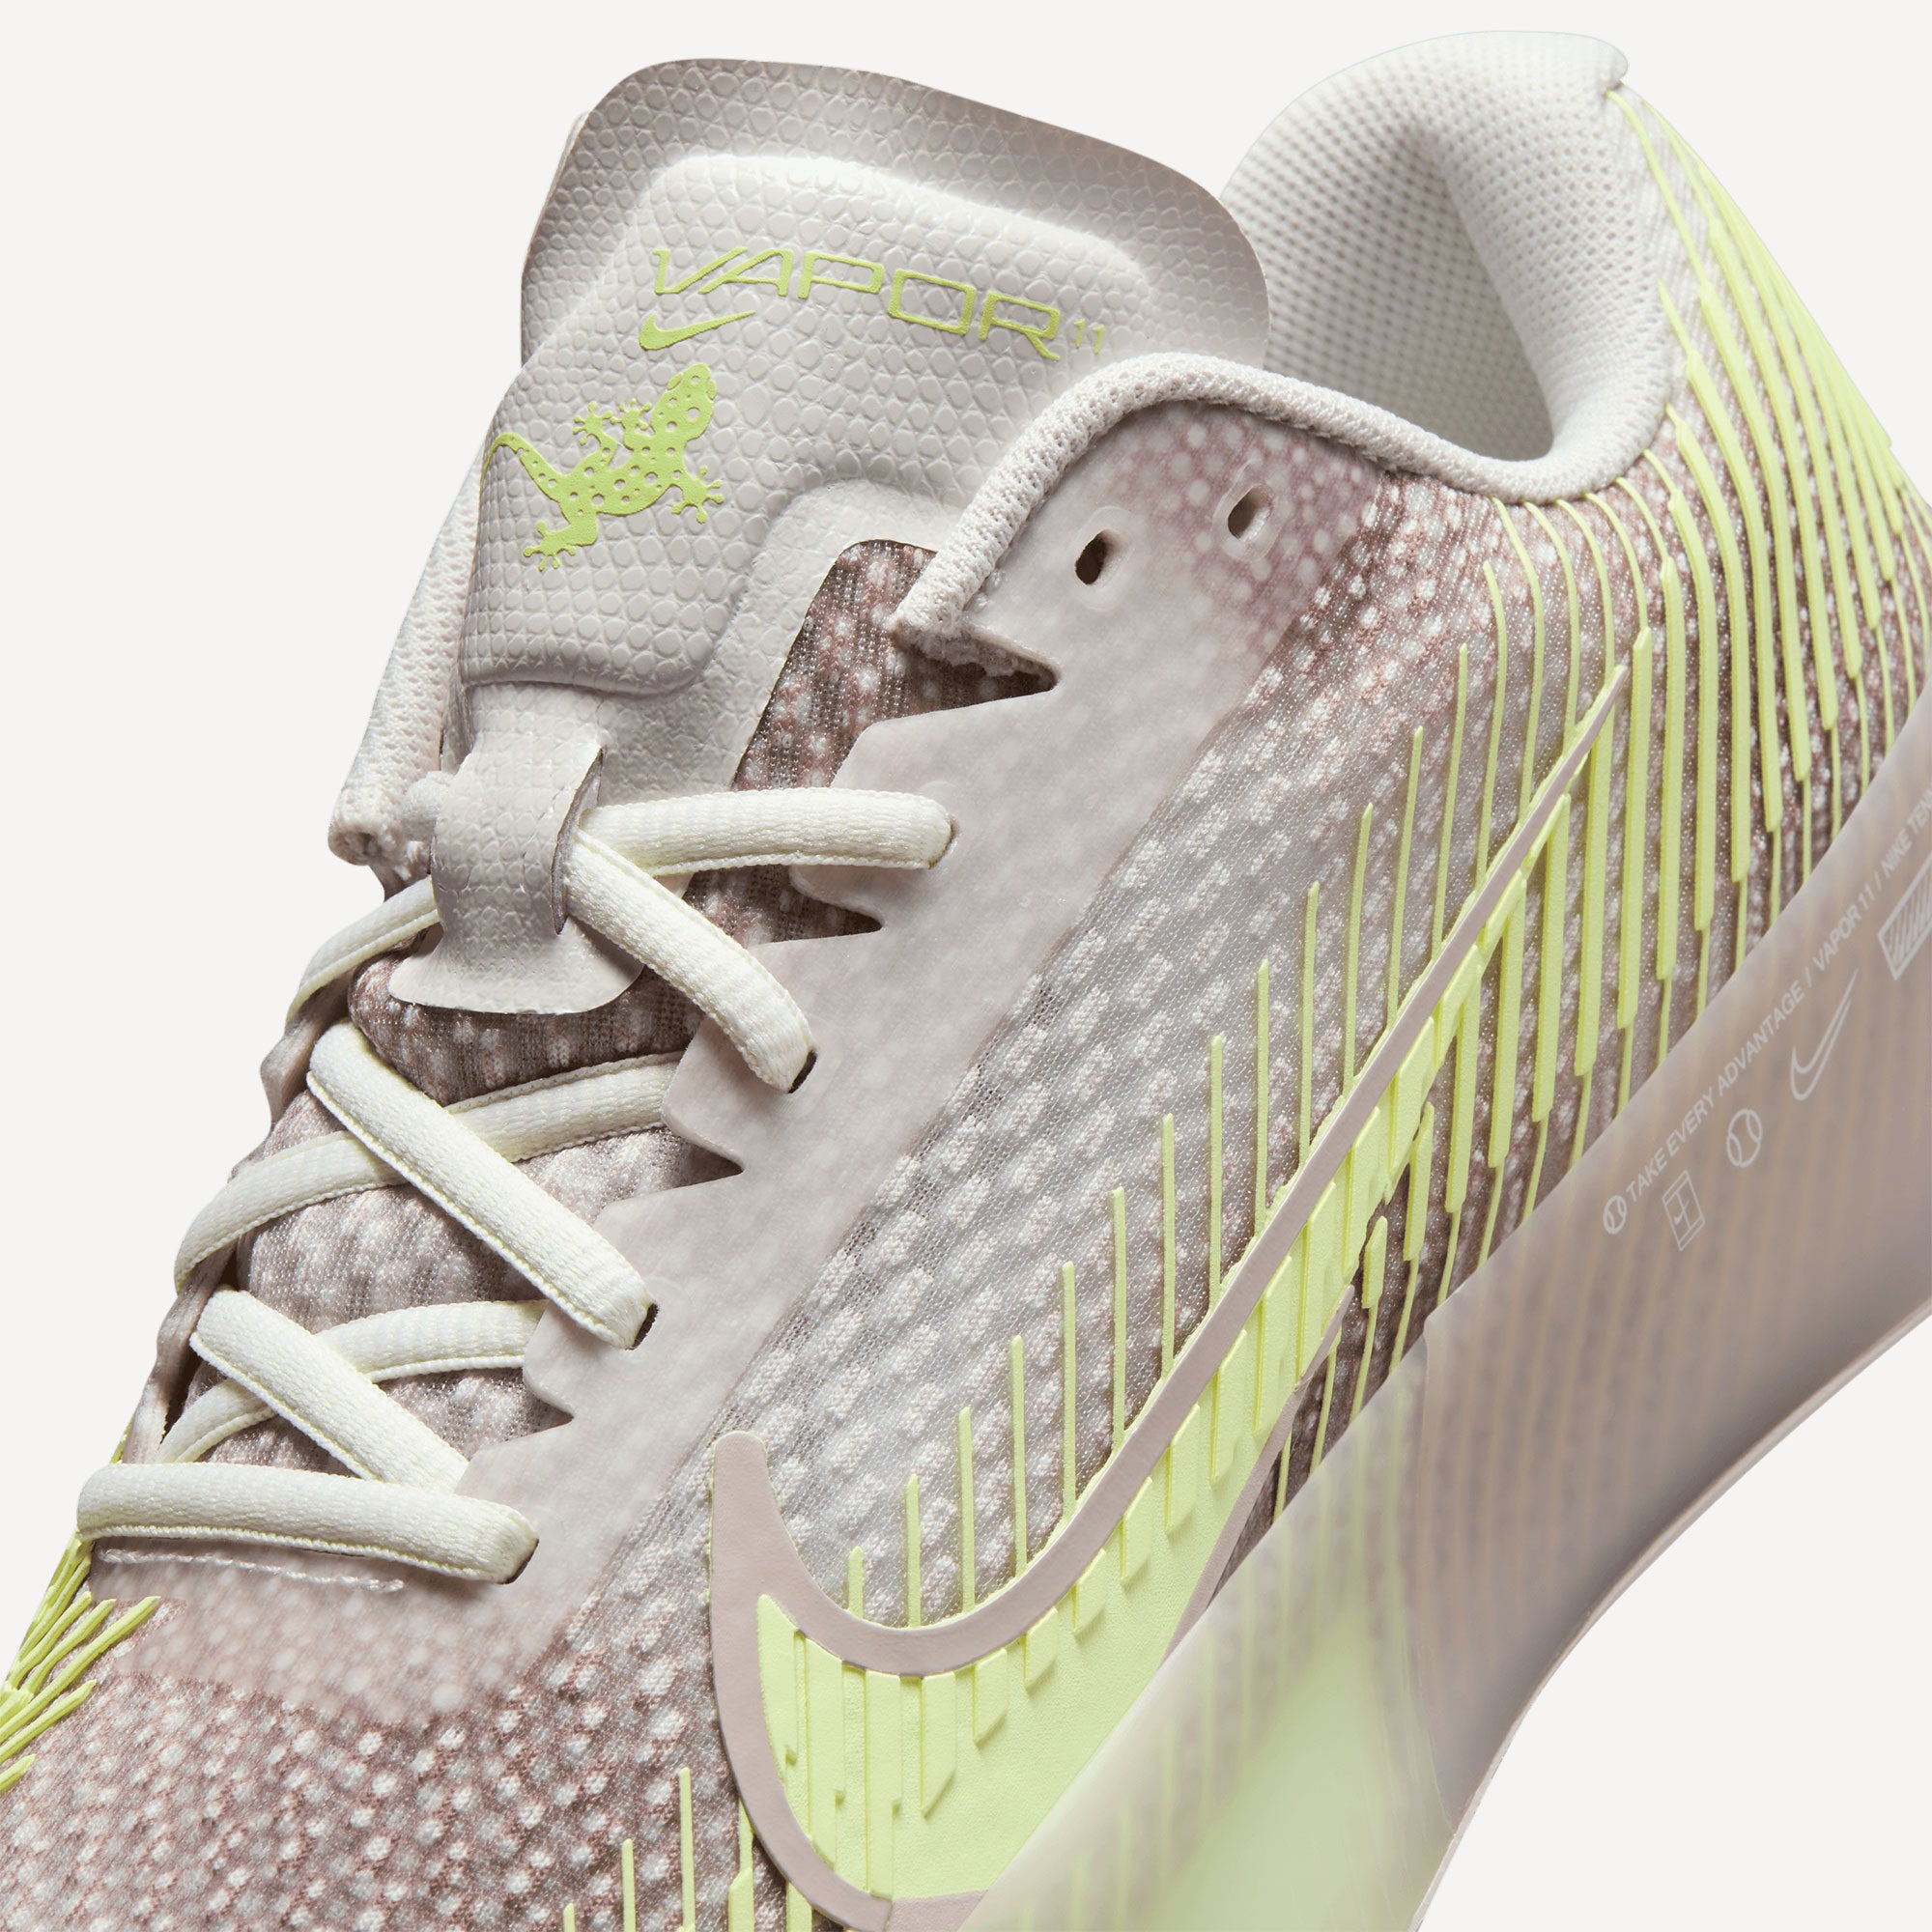 NikeCourt Air Zoom Vapor 11 Premium Women's Hard Court Tennis Shoes - Grey (8)